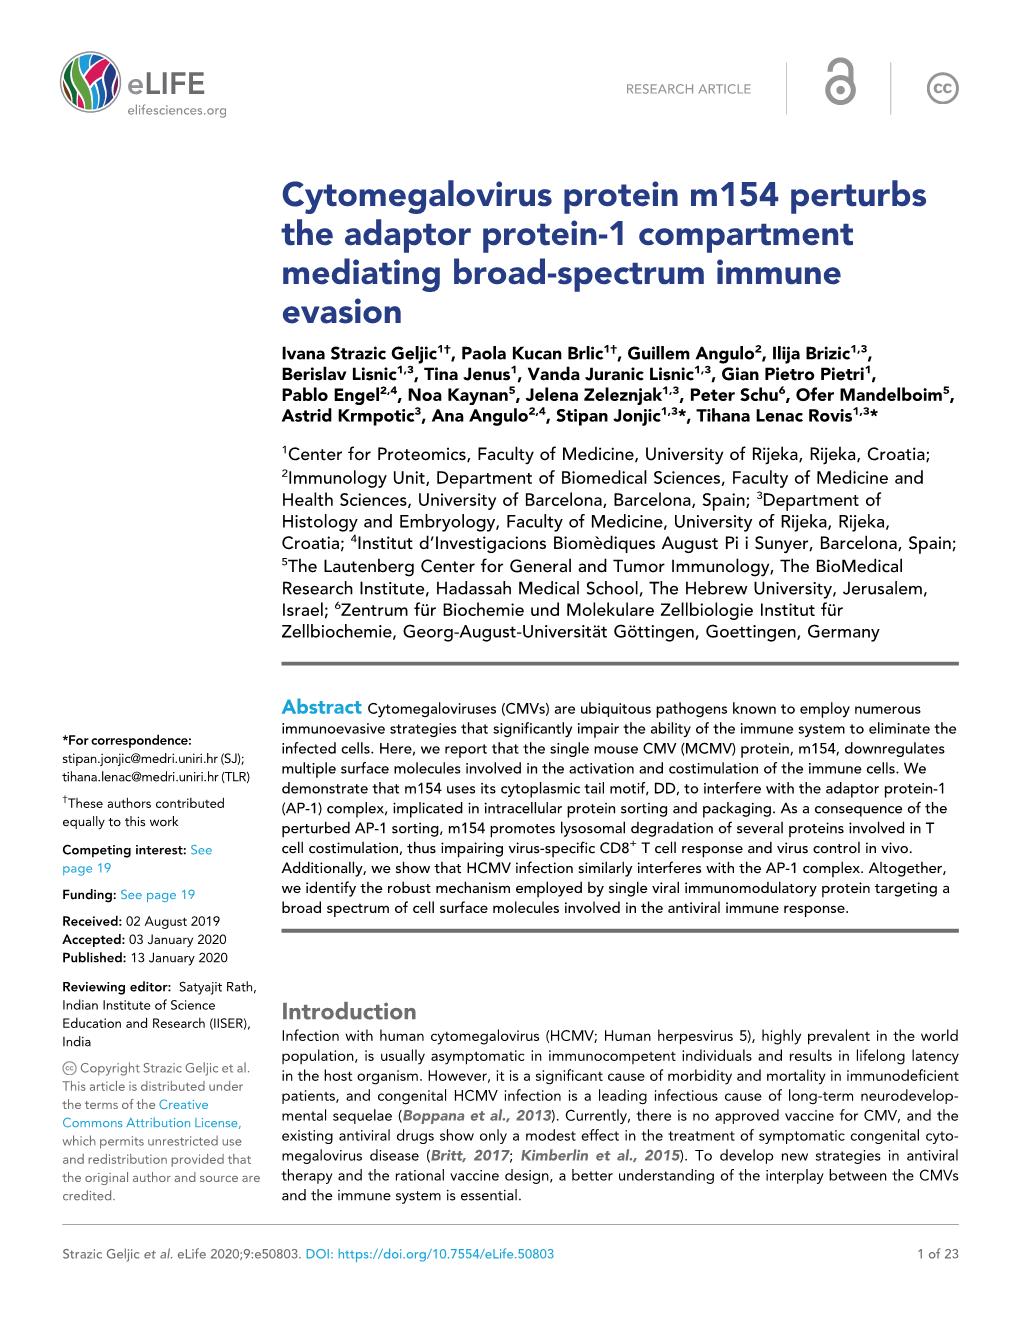 Cytomegalovirus Protein M154 Perturbs the Adaptor Protein-1